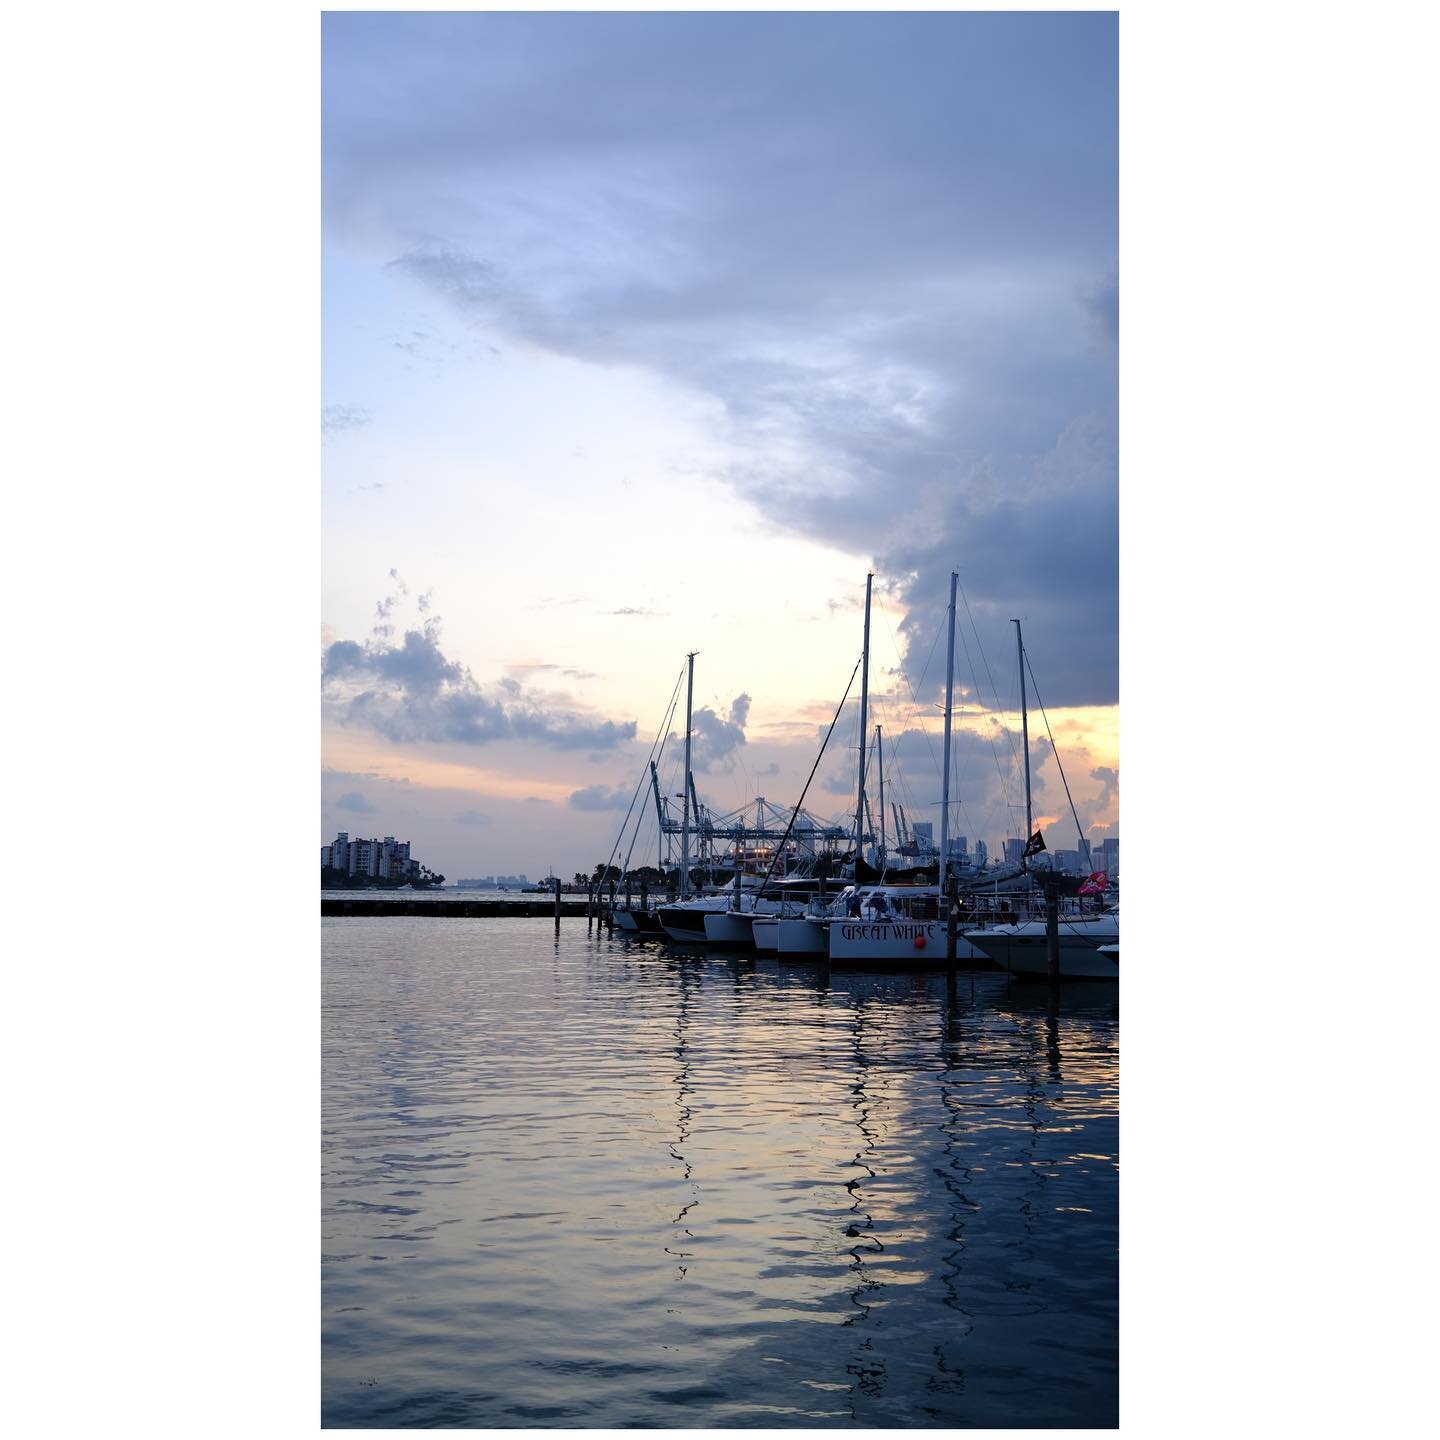 if i caption this &ldquo;good morning&rdquo; no one will know i took it at sunset instead of sunrise
.
.
.
.
#sailboats #sailboat #marina #reflection #water #ocean #Fuji #FujiX100v #X100v #photography #digitalphotography #affinityphoto #fujilove #myf